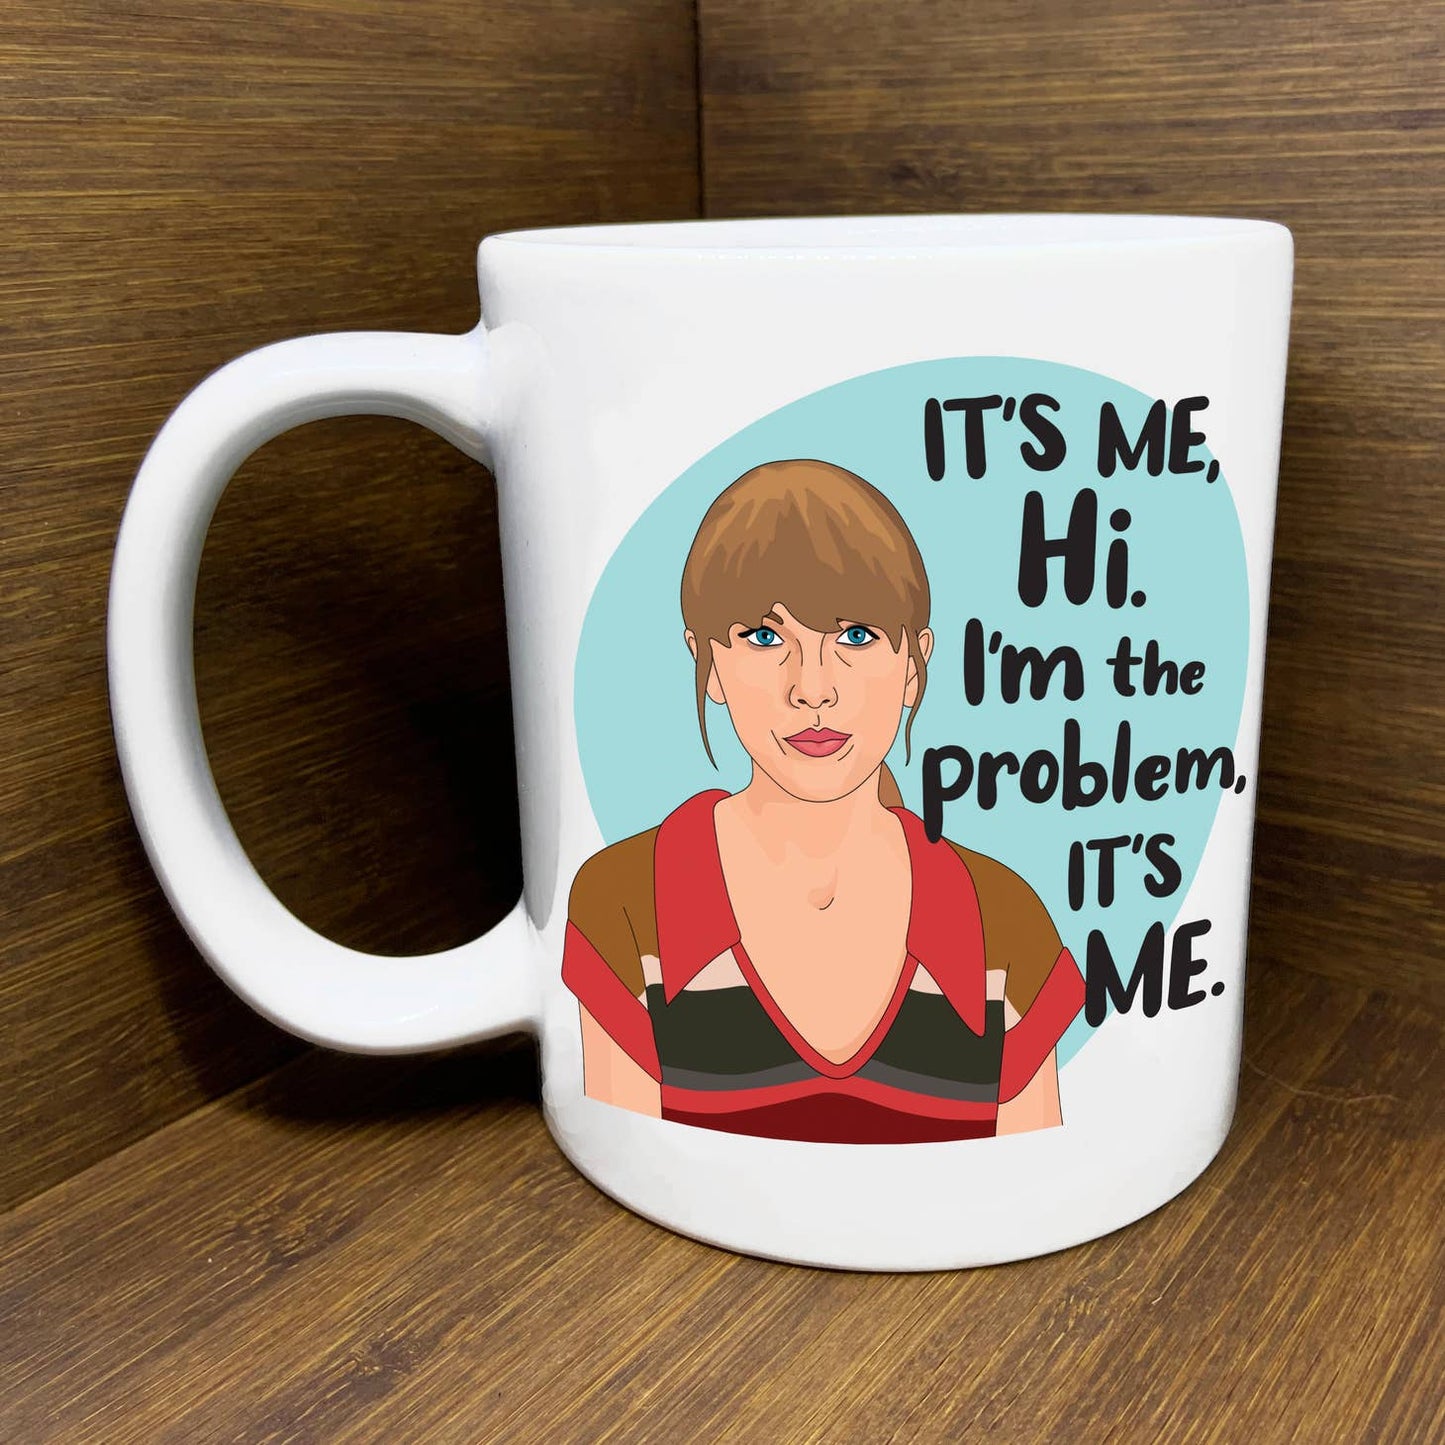 Taylor "Anti-Hero" Coffee Mug